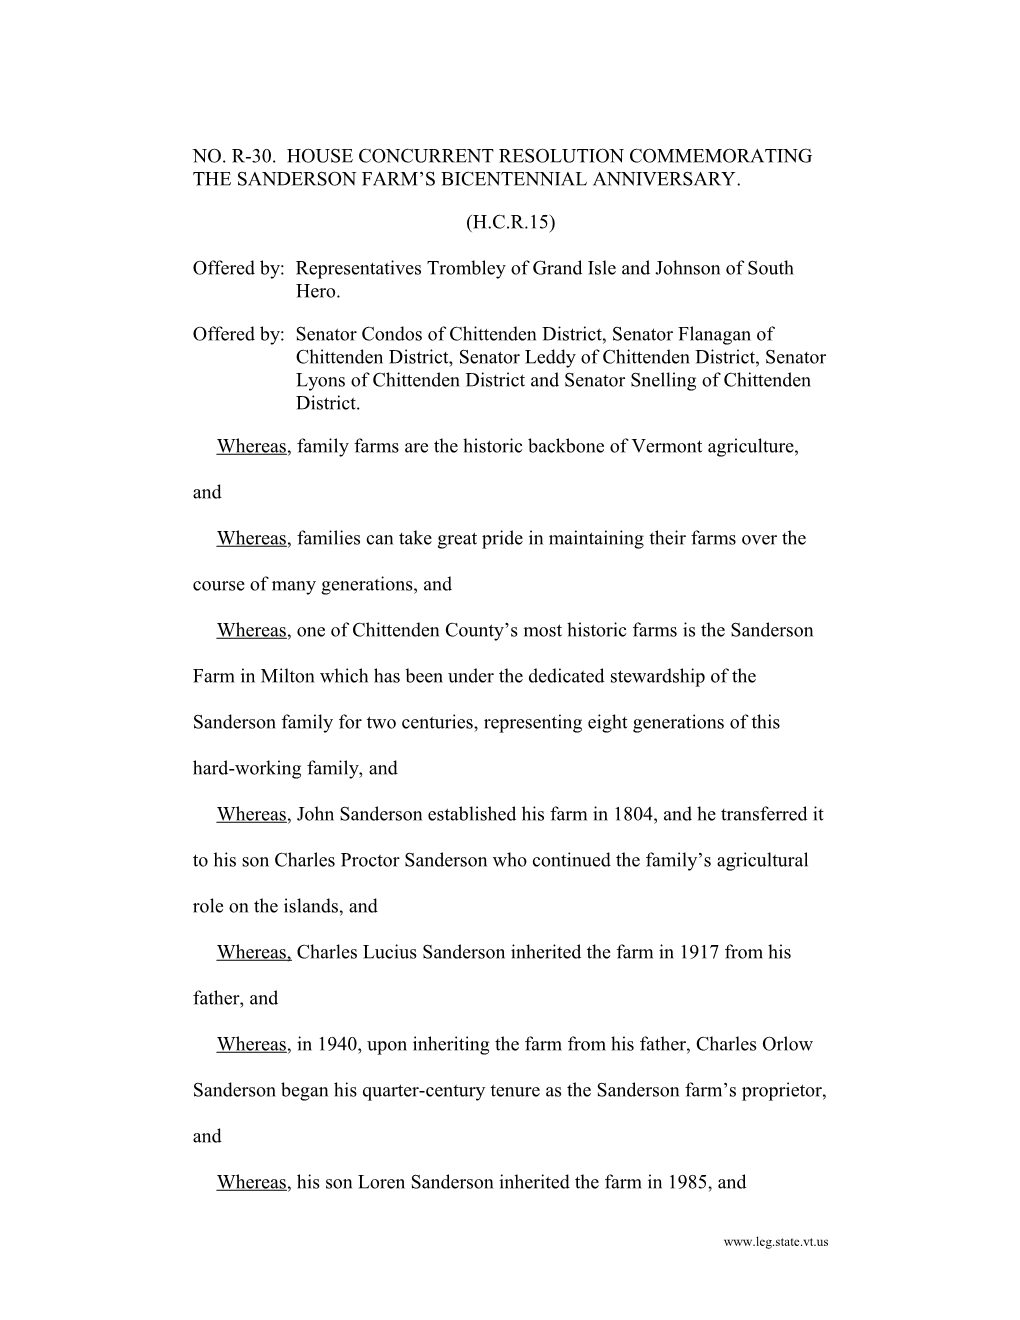 NO. R-30. House Concurrent Resolution Commemorating the Sanderson Farm S Bicentennial